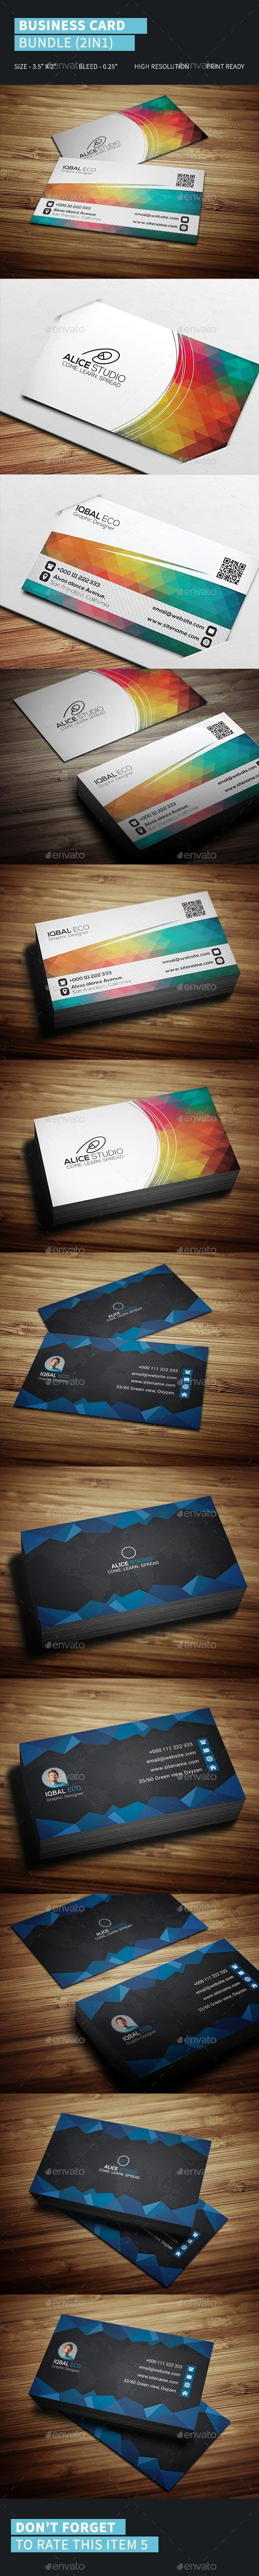 graphicriver: Business Card Bundle